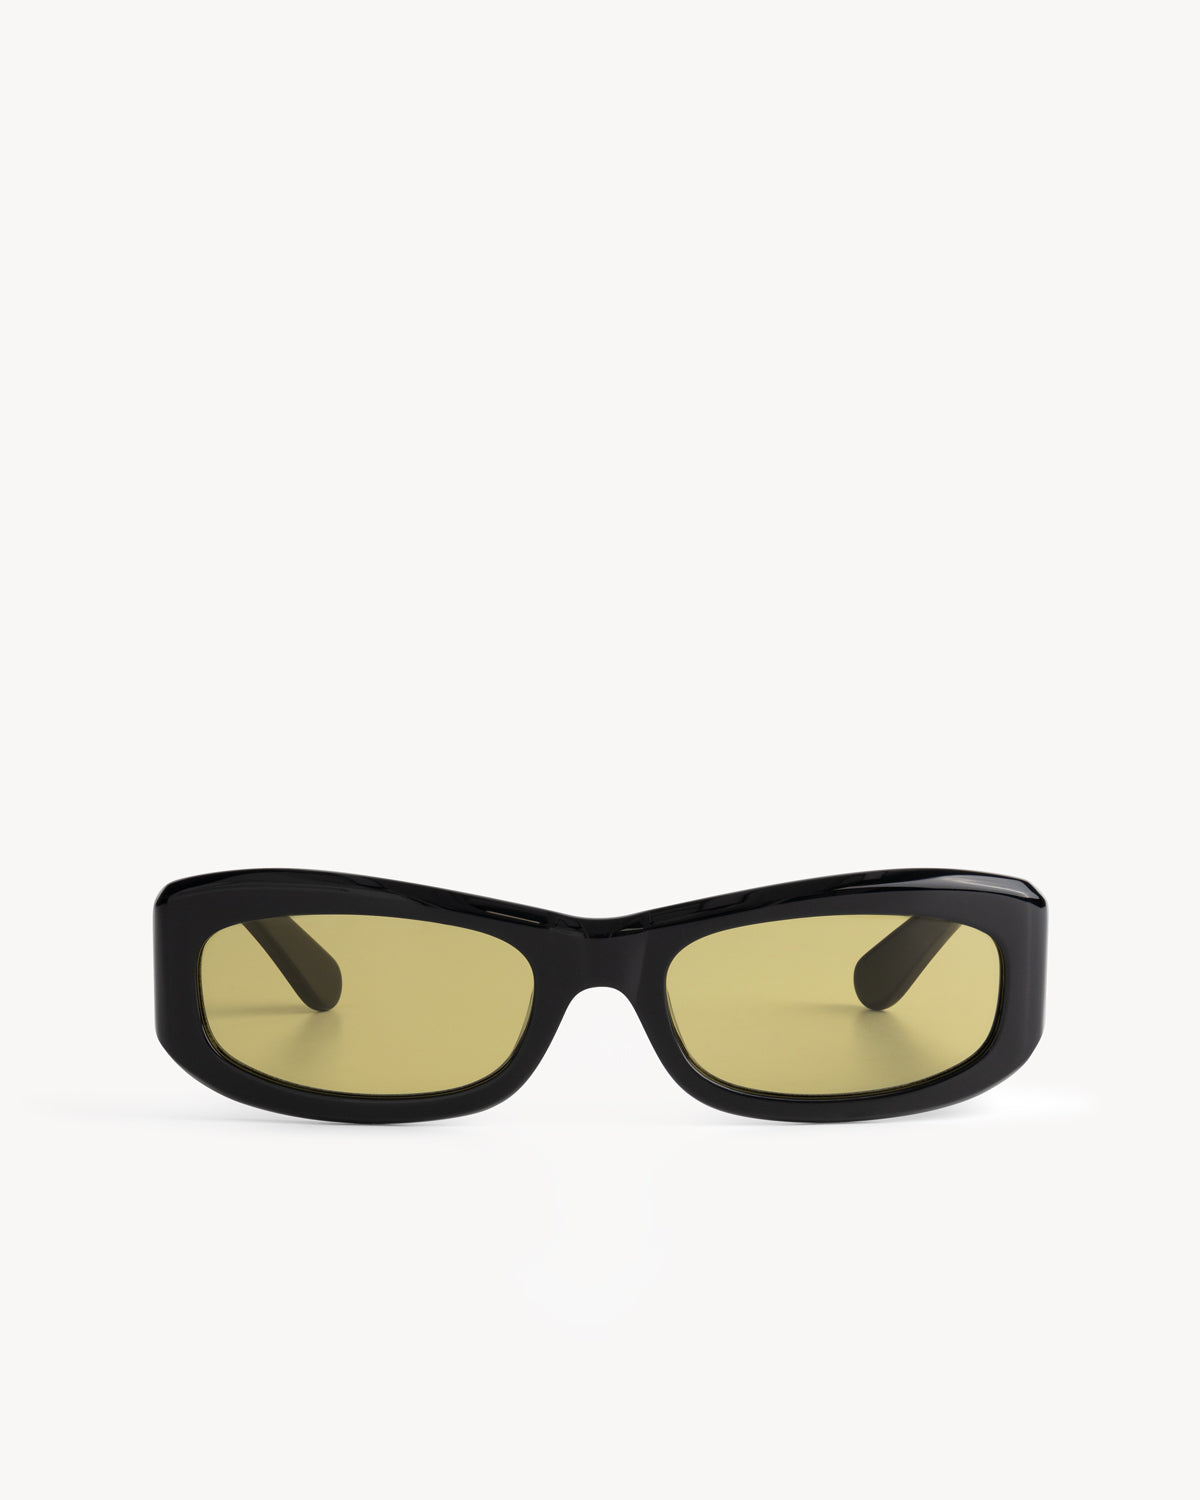 Port Tanger Saudade Sunglasses in Black Acetate and Warm Olive Lenses 1